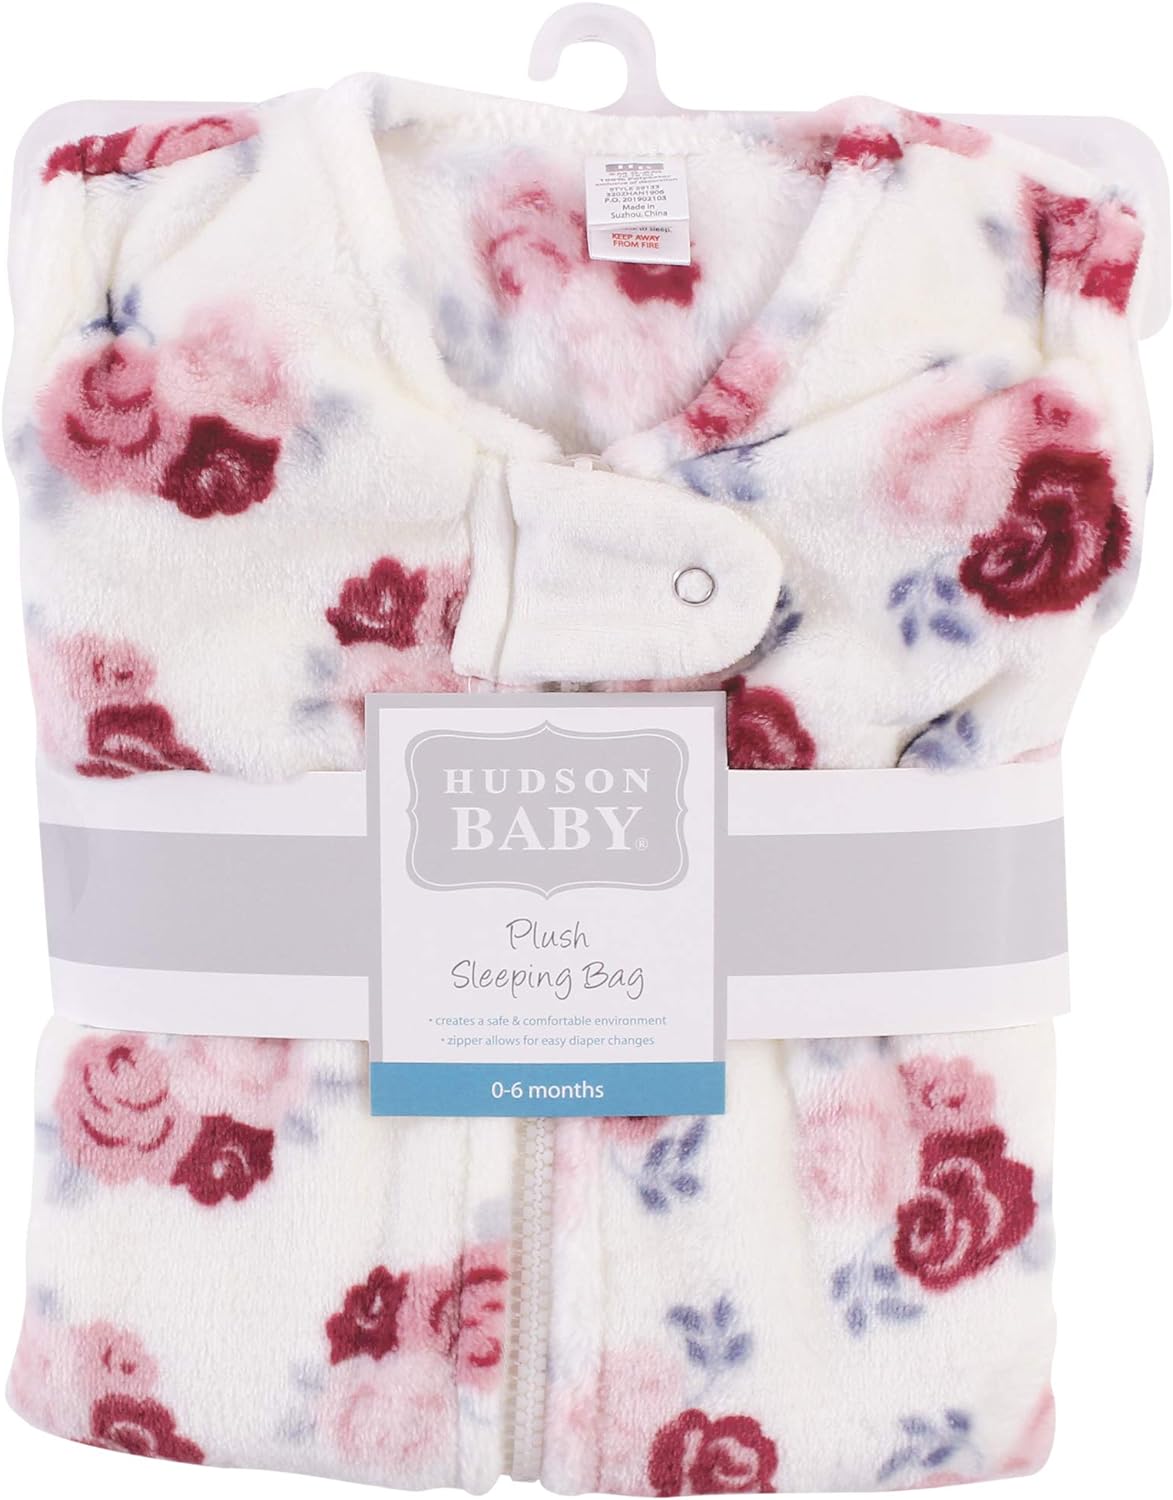 Hudson Baby Unisex BabyPlush Sleeping Bag, Sack, Blanket